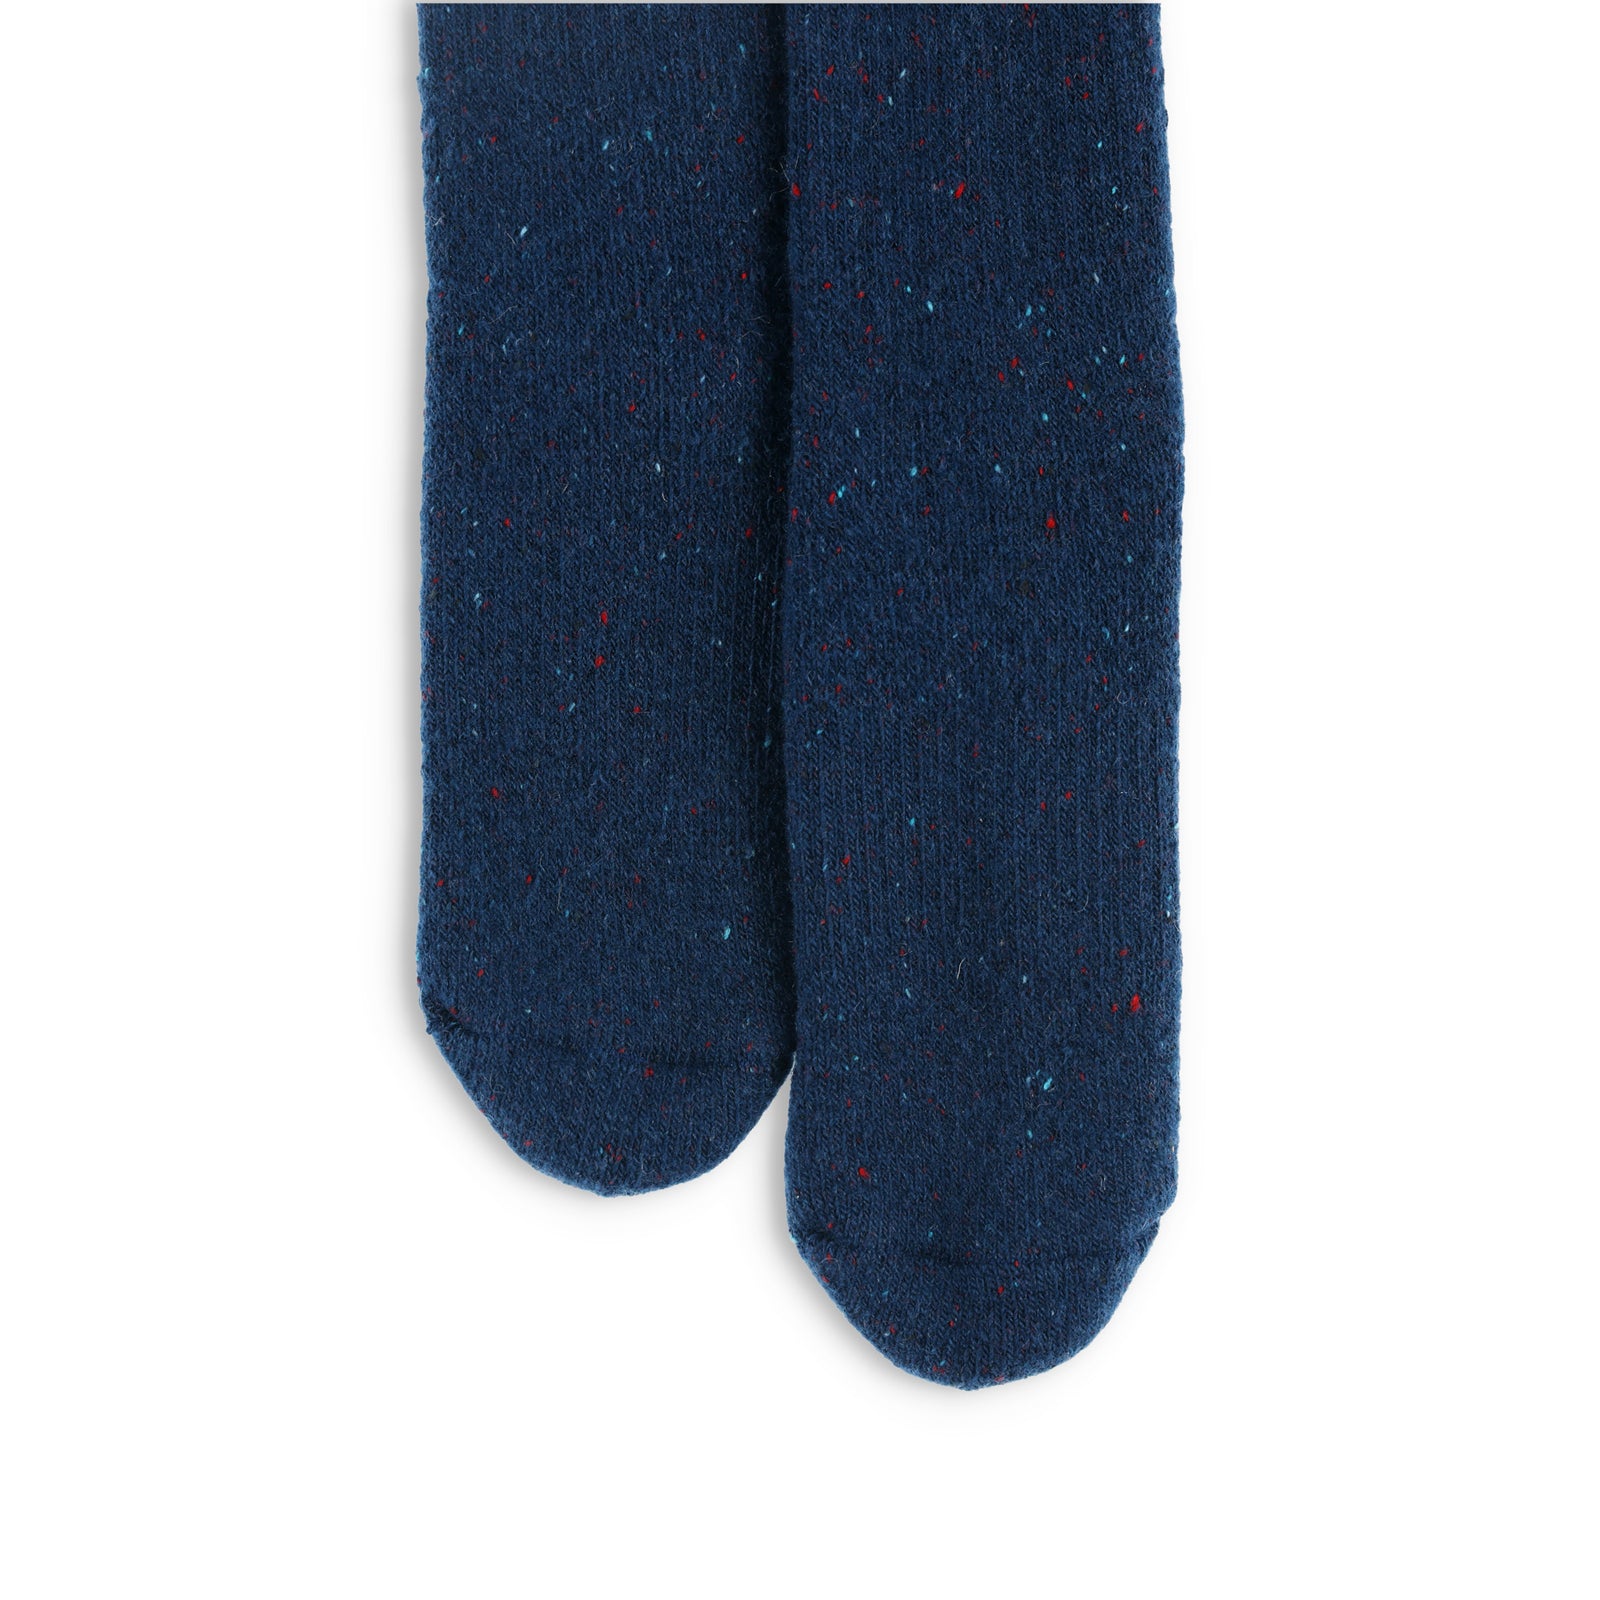 General detail shot of Topo Designs Mountain heavyweight wool blend hiking Socks in "Pond Blue"